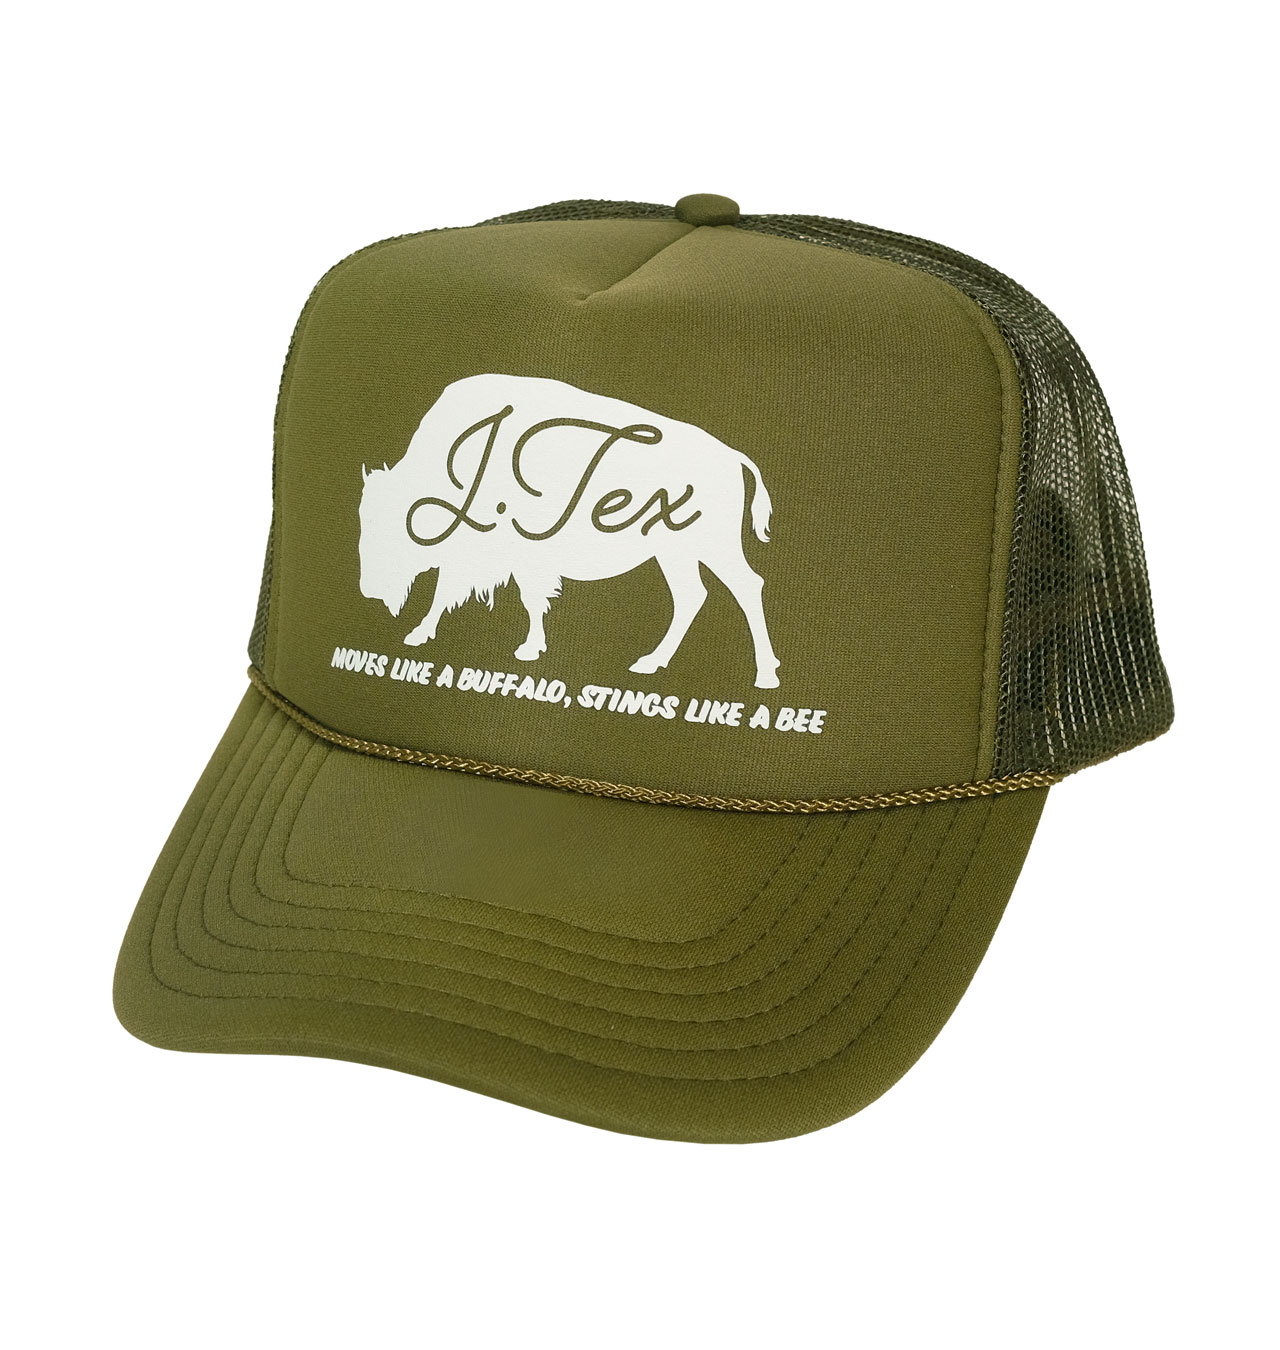 J Tex - Moves Like A Buffalo Trucker Cap - Olive/White